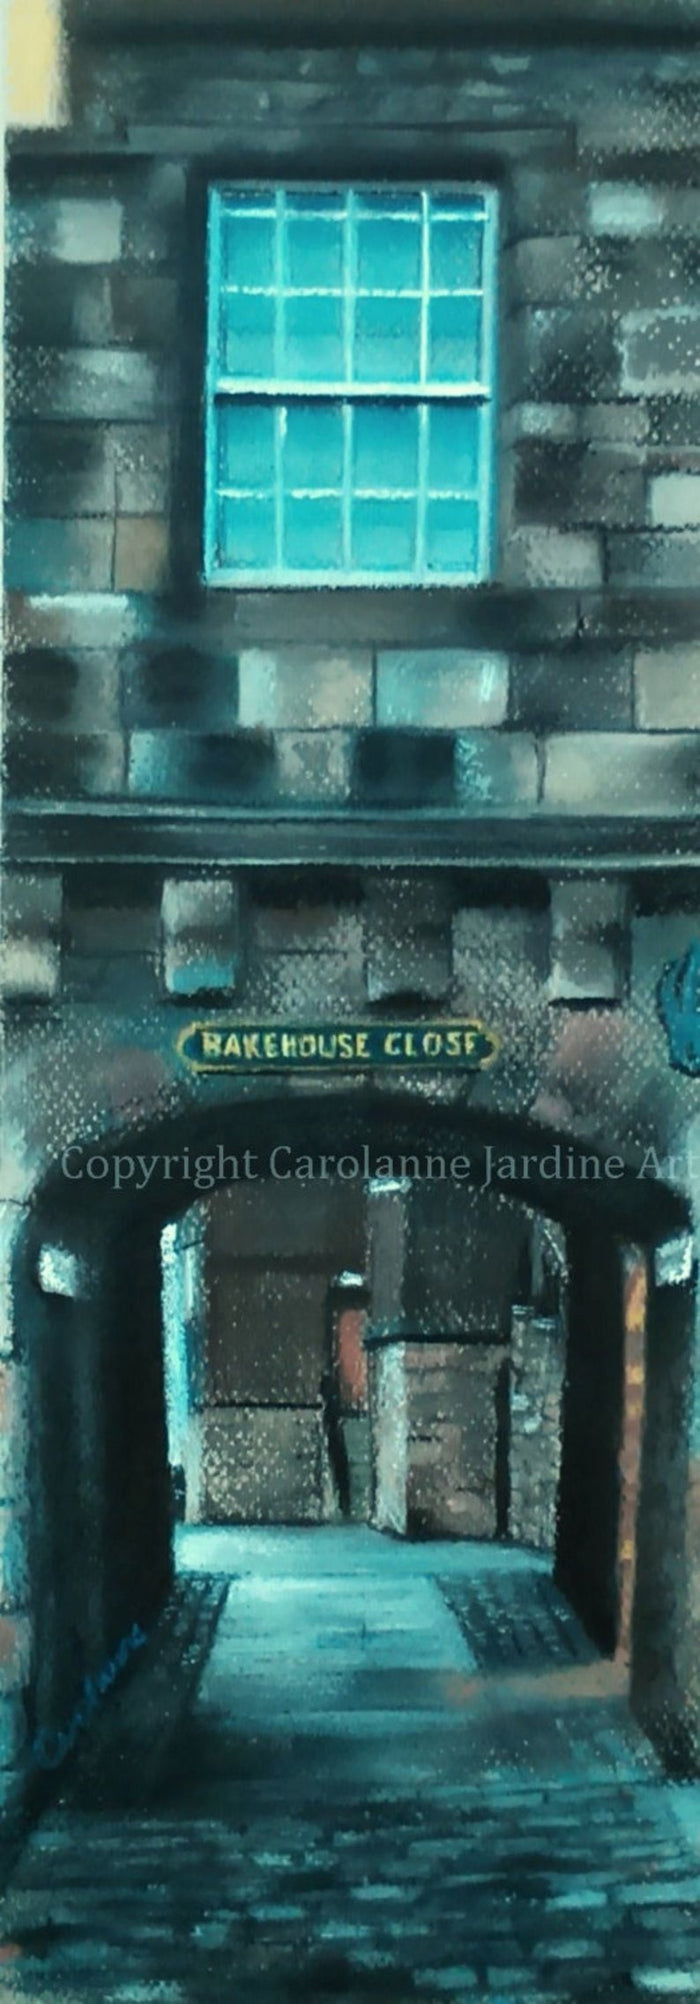 BAKEHOUSE CLOSE by Carolanne Jardine